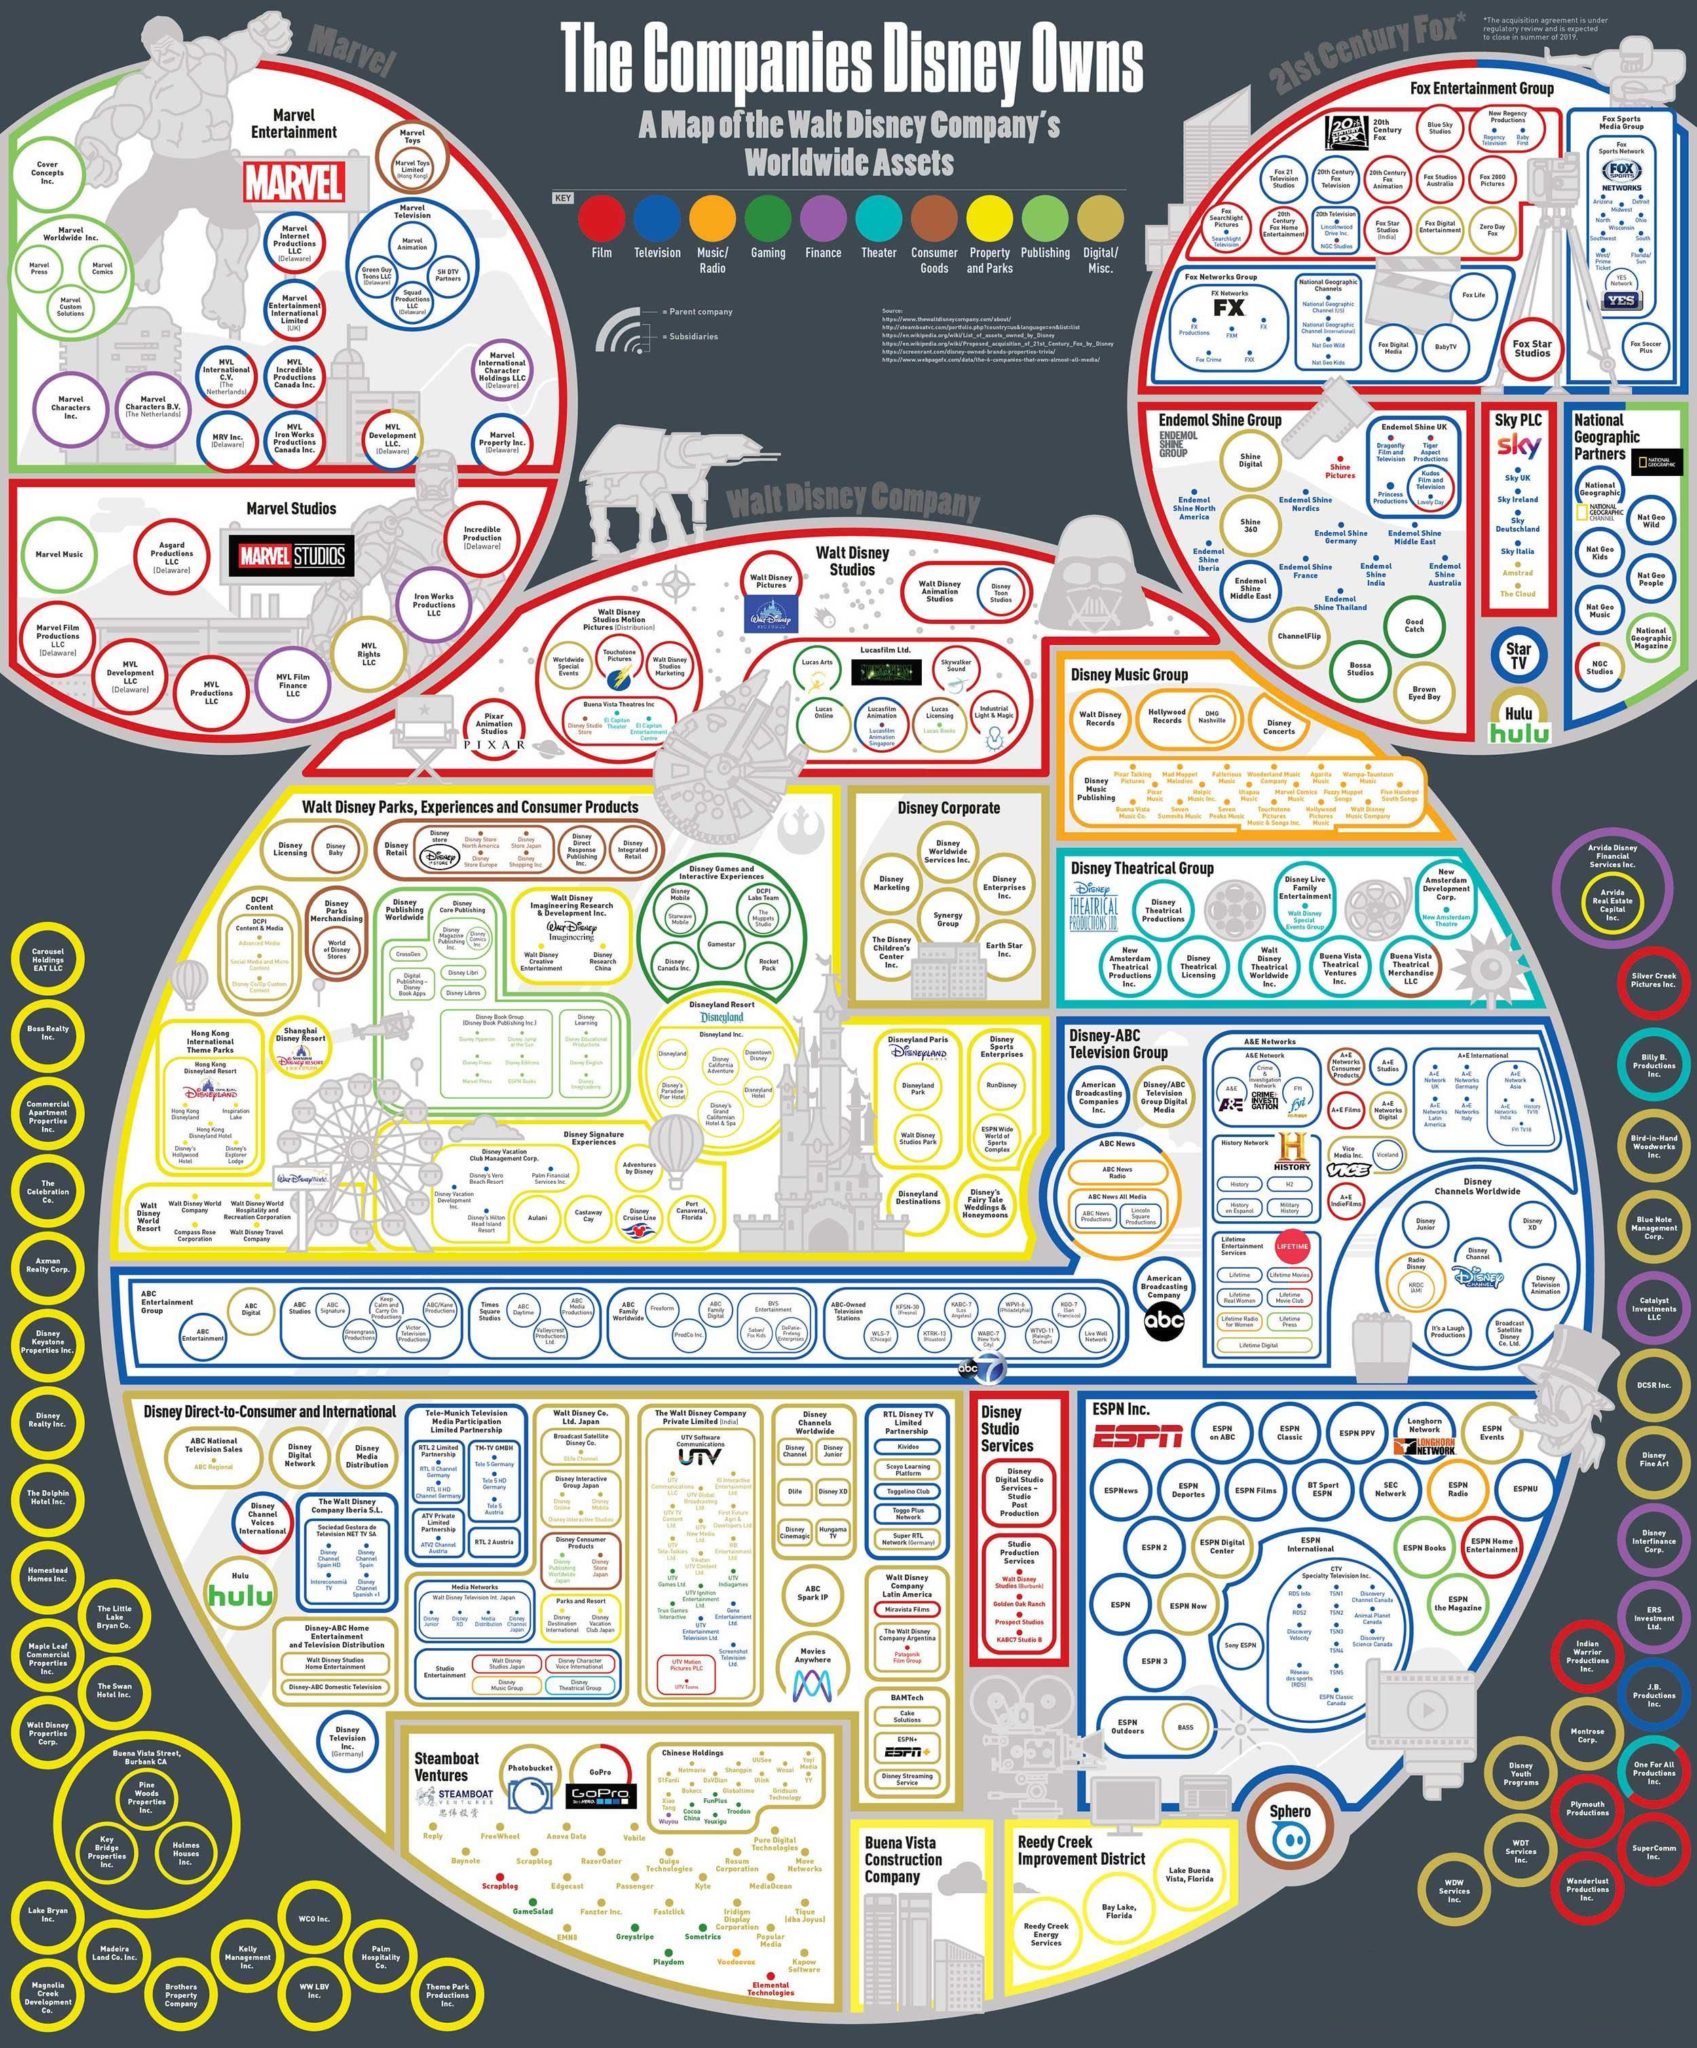 Companies Disney